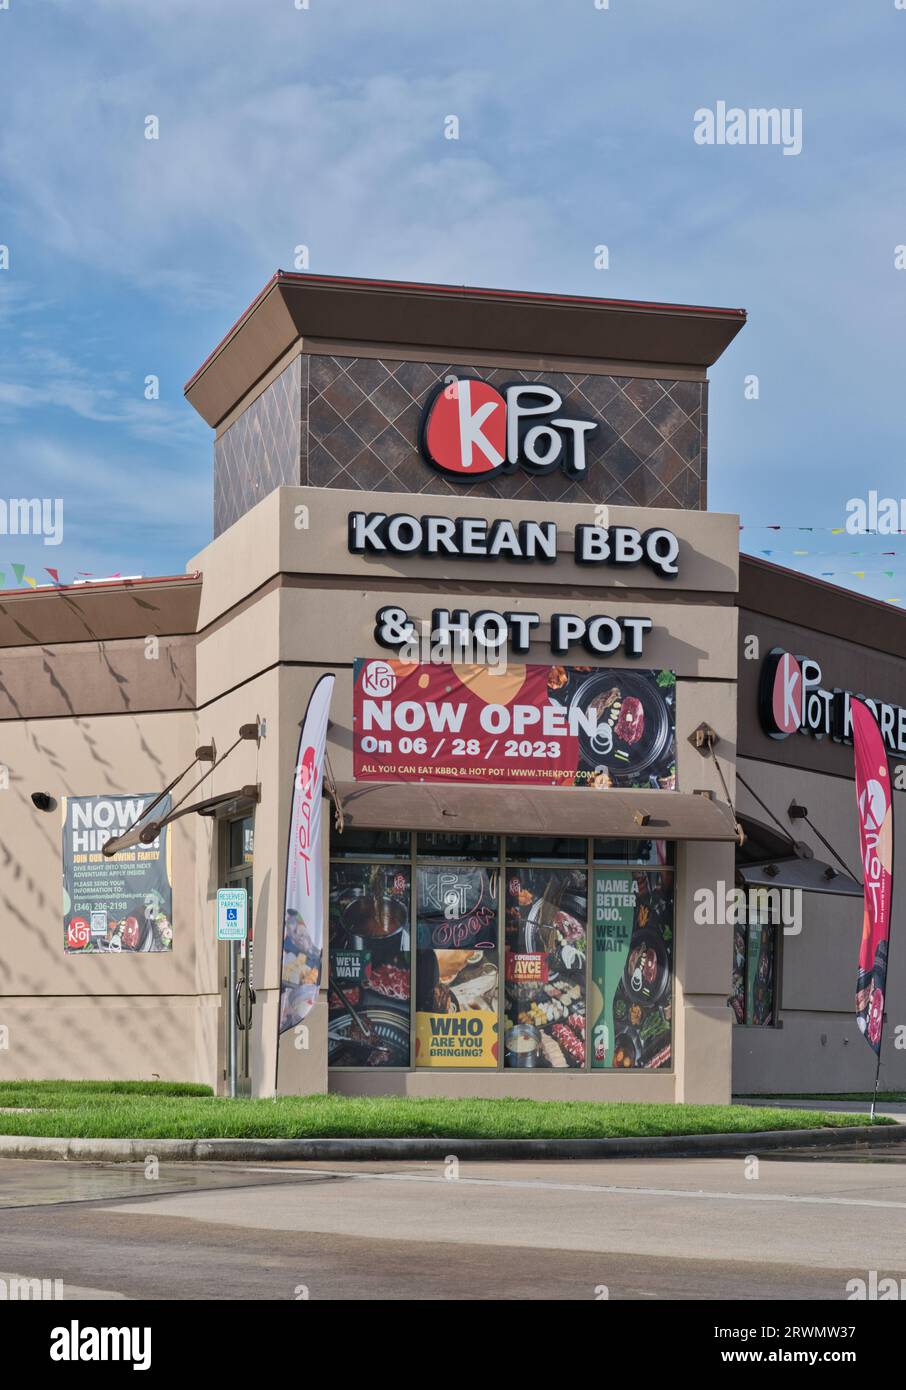 https://c8.alamy.com/comp/2RWMW37/houston-texas-usa-07-04-2023-kpot-korean-bbq-and-hot-pot-storefront-exterior-in-houston-tx-national-korean-cuisine-restaurant-chain-2RWMW37.jpg